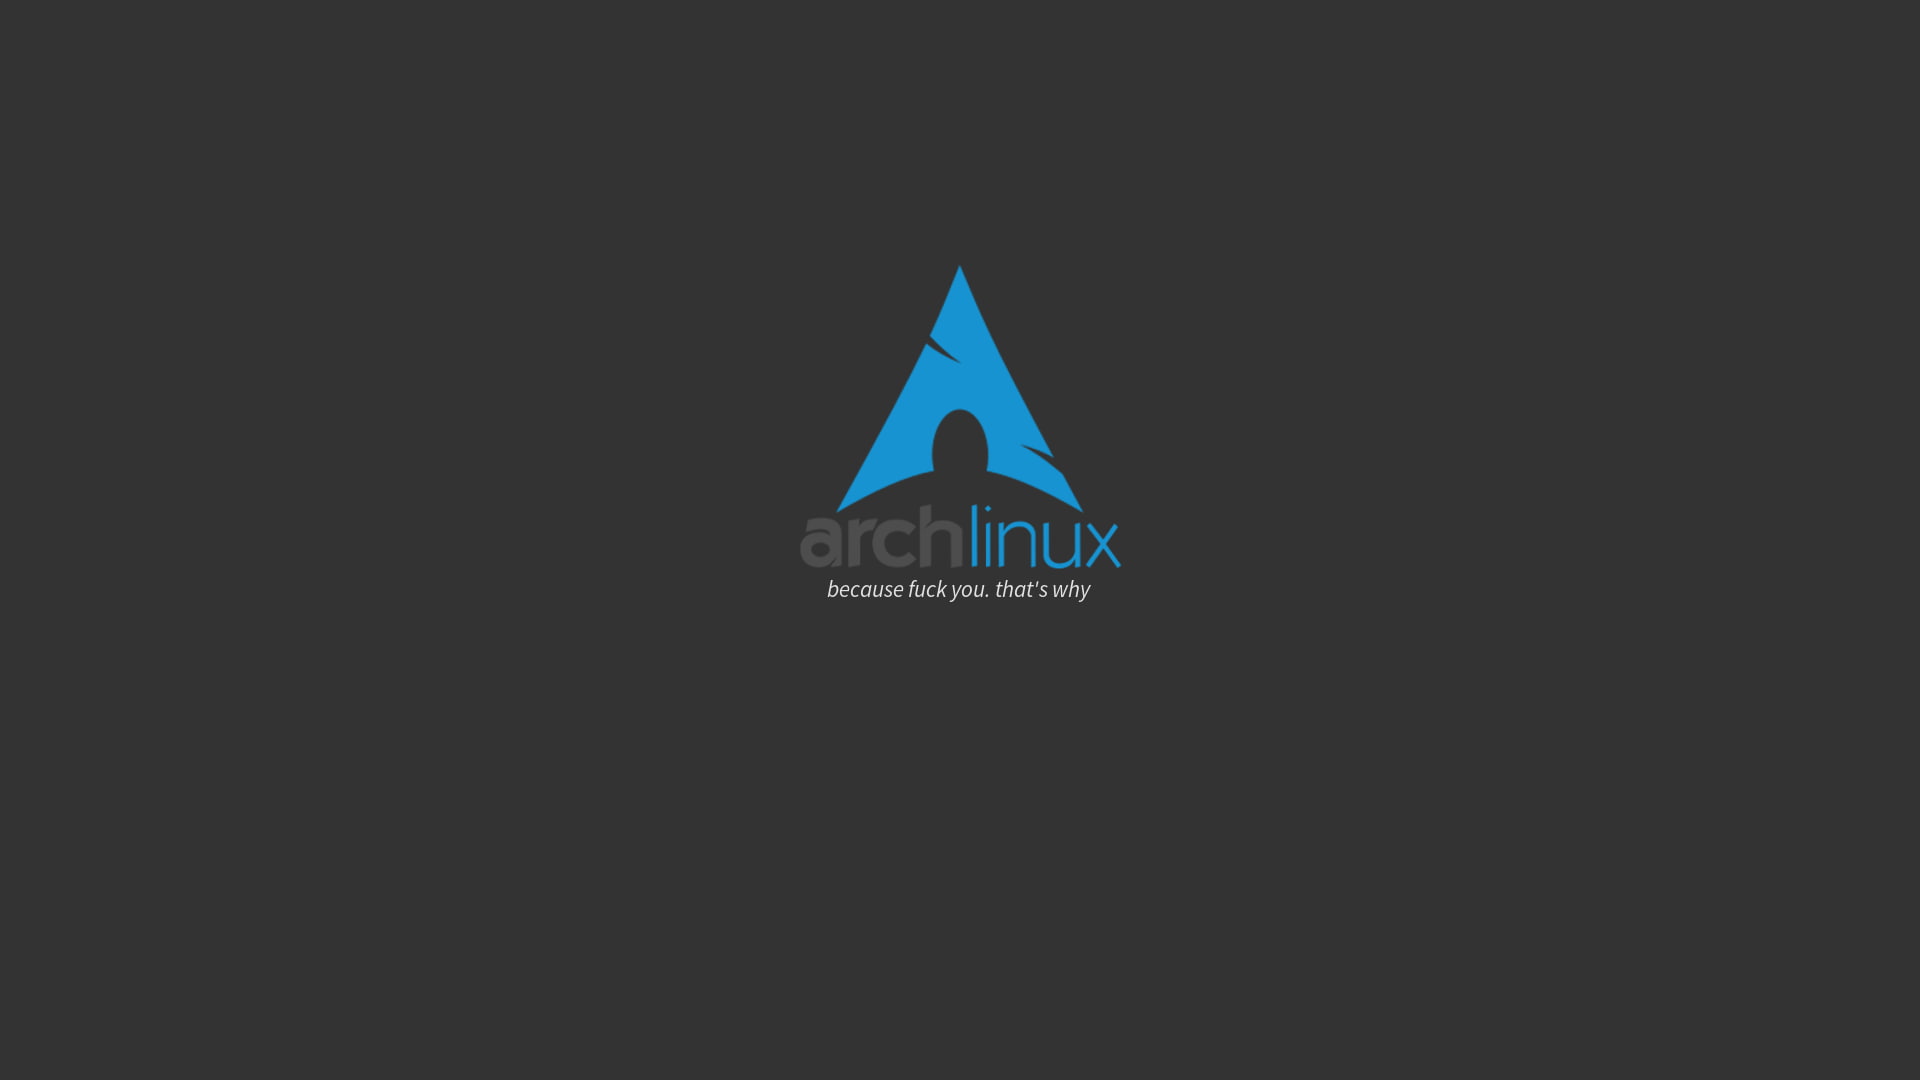 Archlinux, Arch Linux, copy space, triangle shape, communication